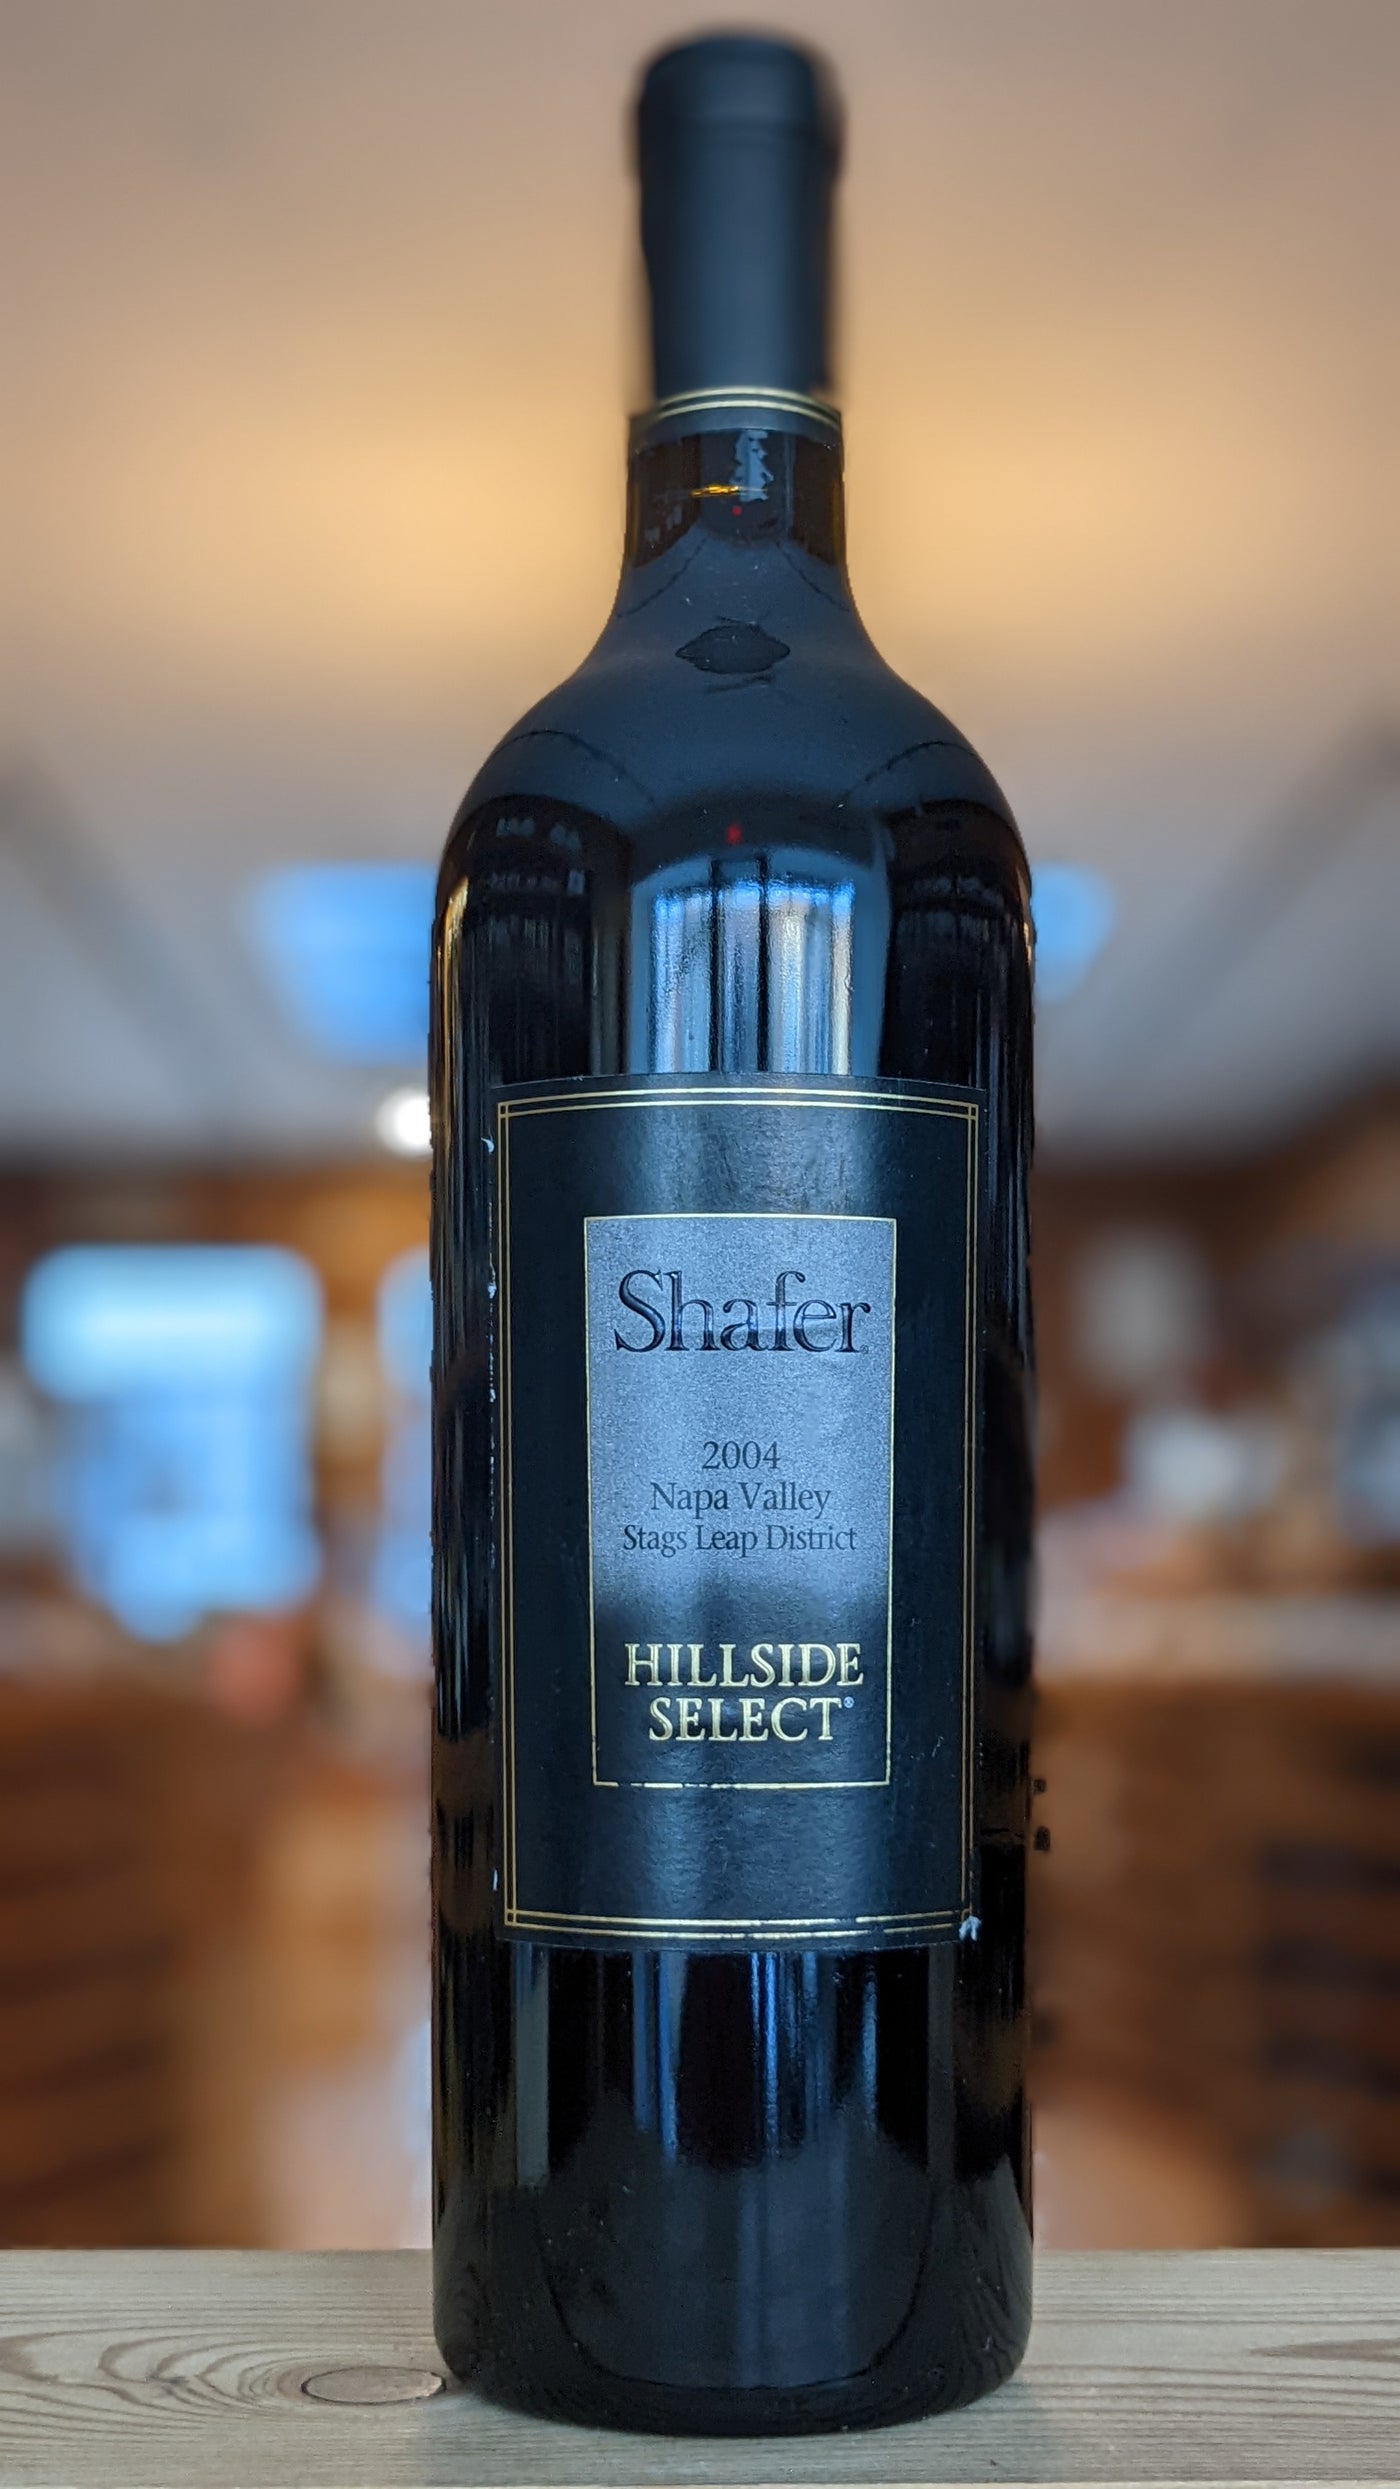 Shafer "Hillside Select" Cabernet Sauvignon 2004